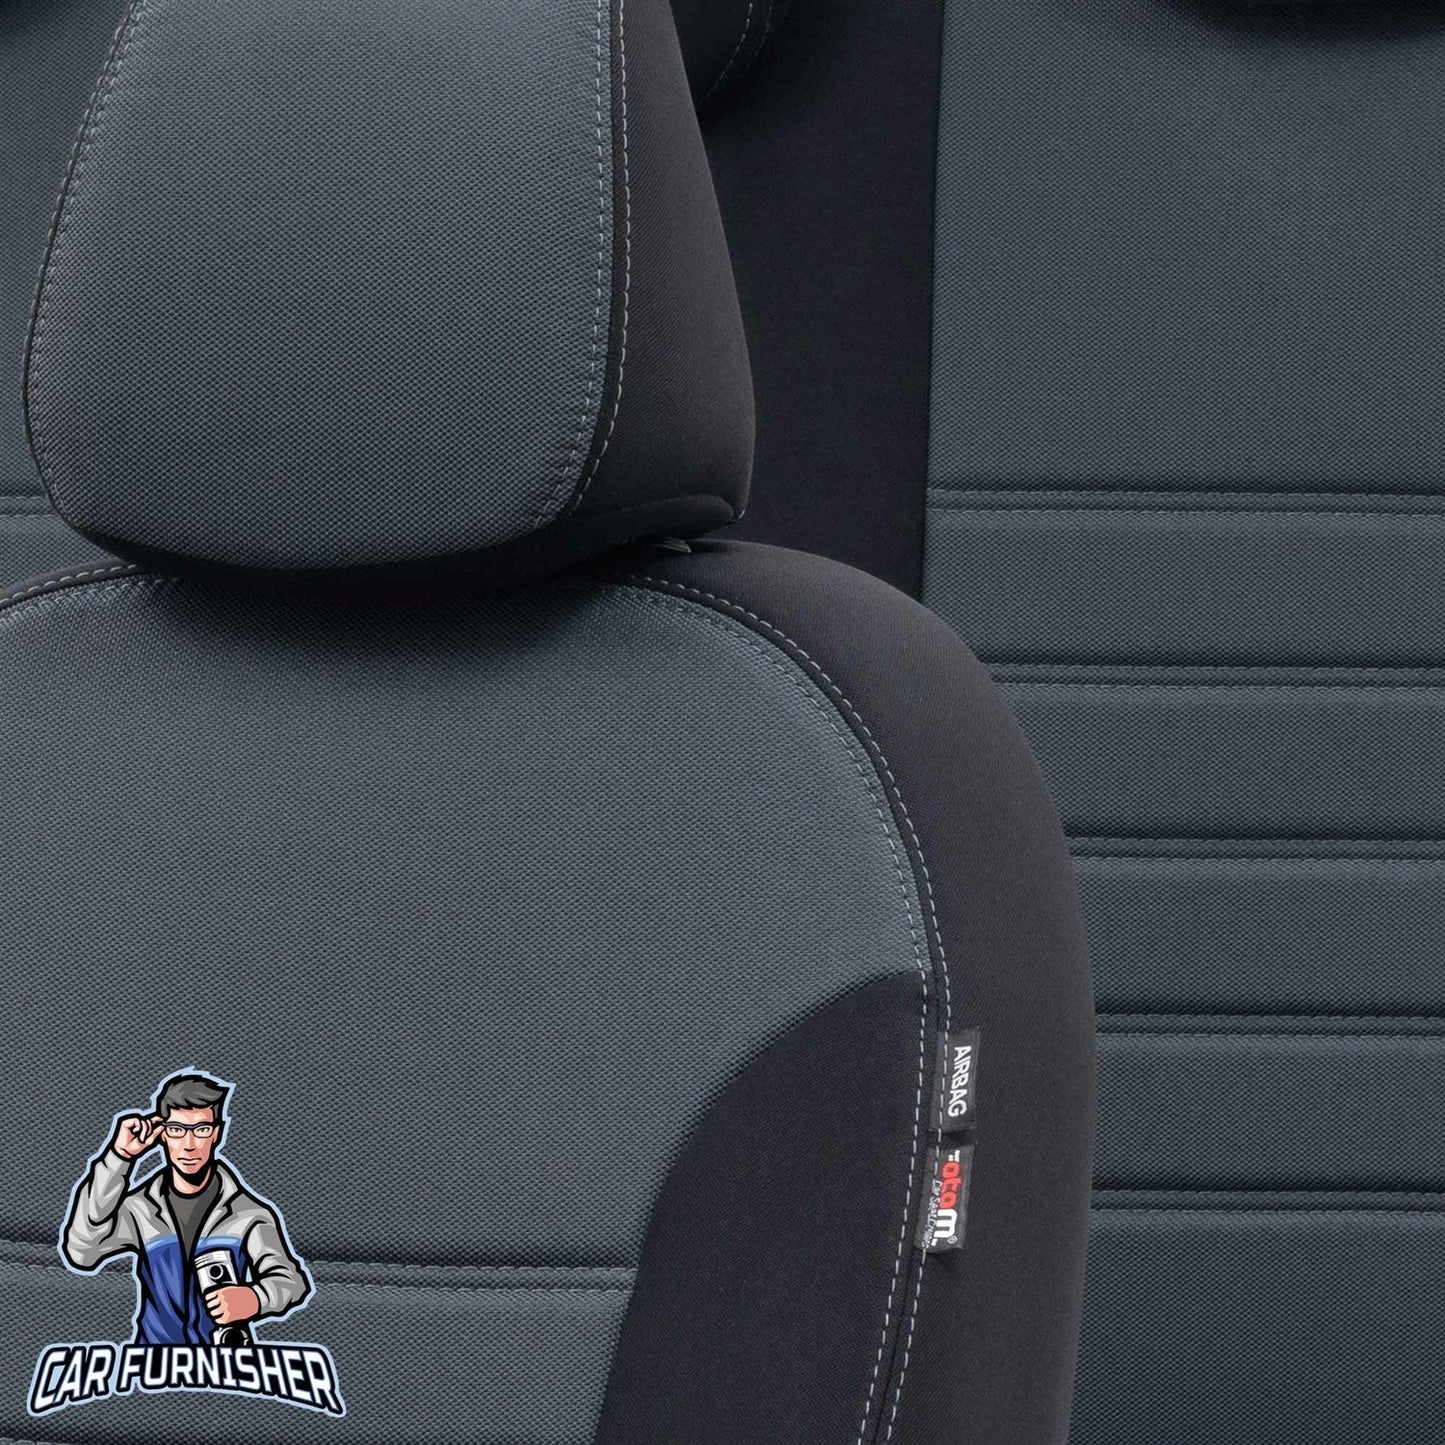 Fiat Fullback Seat Covers Original Jacquard Design Smoked Black Jacquard Fabric